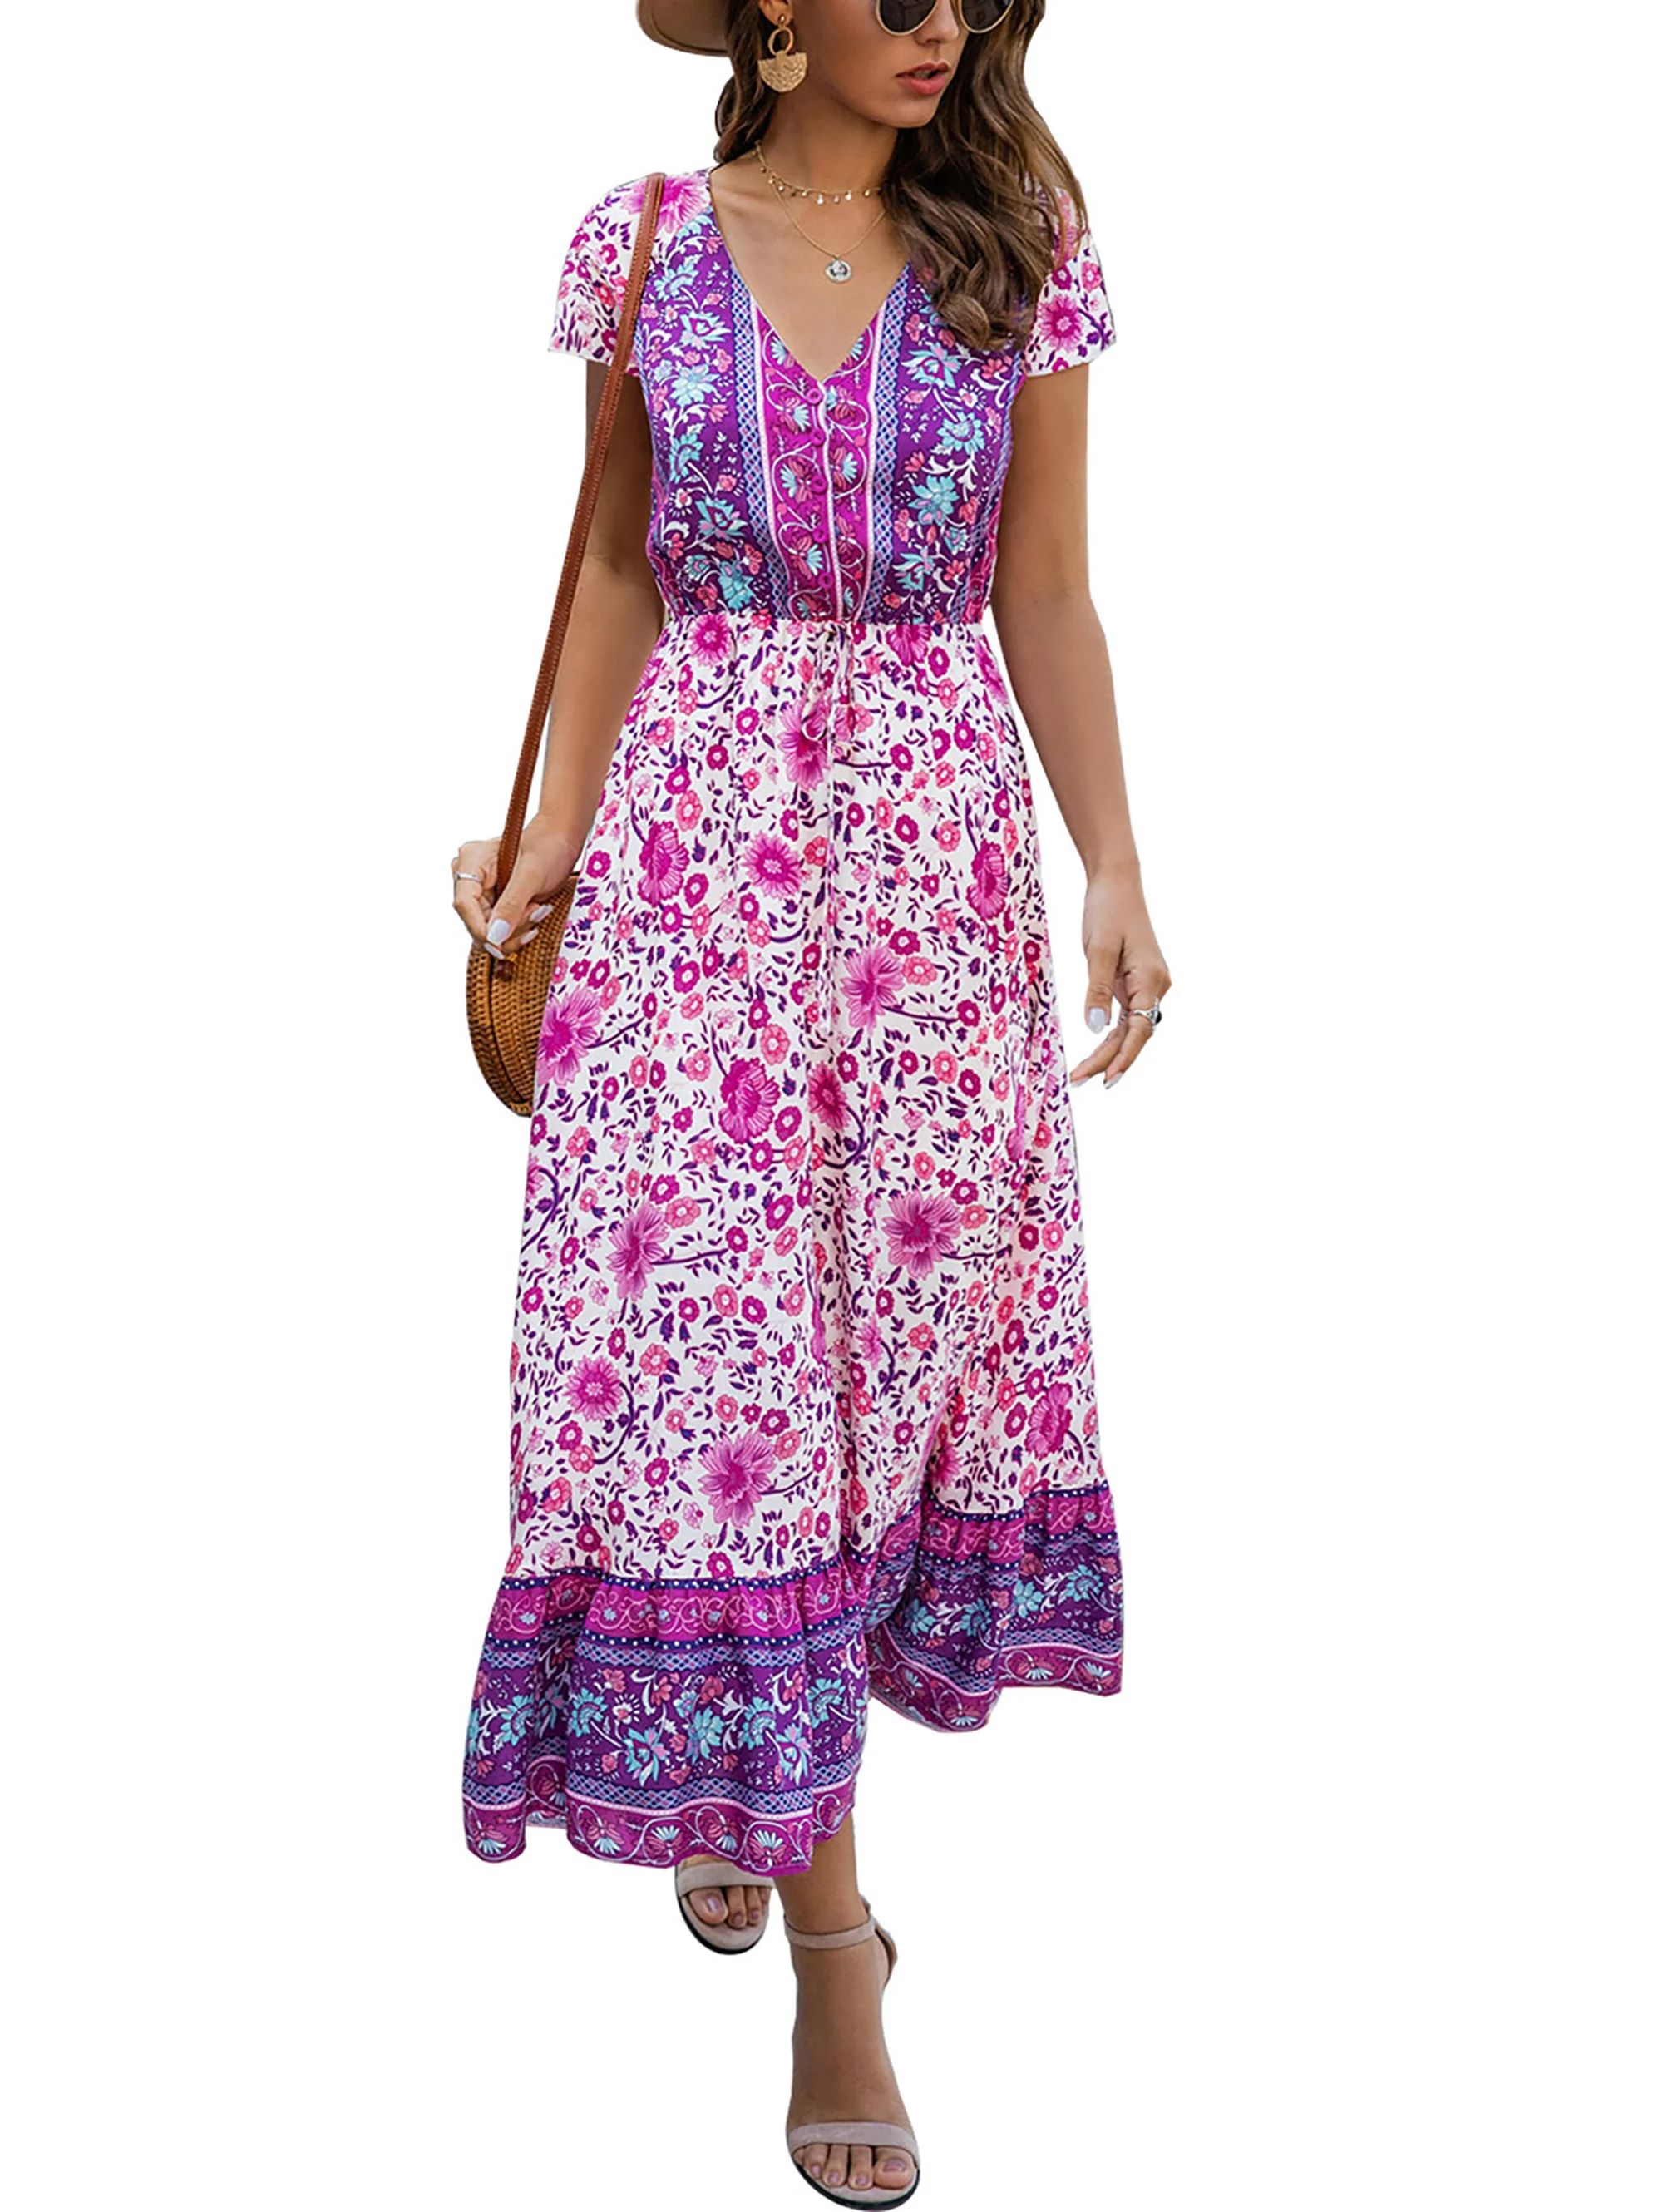 TEMOFON Women's Bohemian Maxi Dresses Summer Casual Short Sleeve V Neck Floral Print Dress Purple... | Walmart (US)